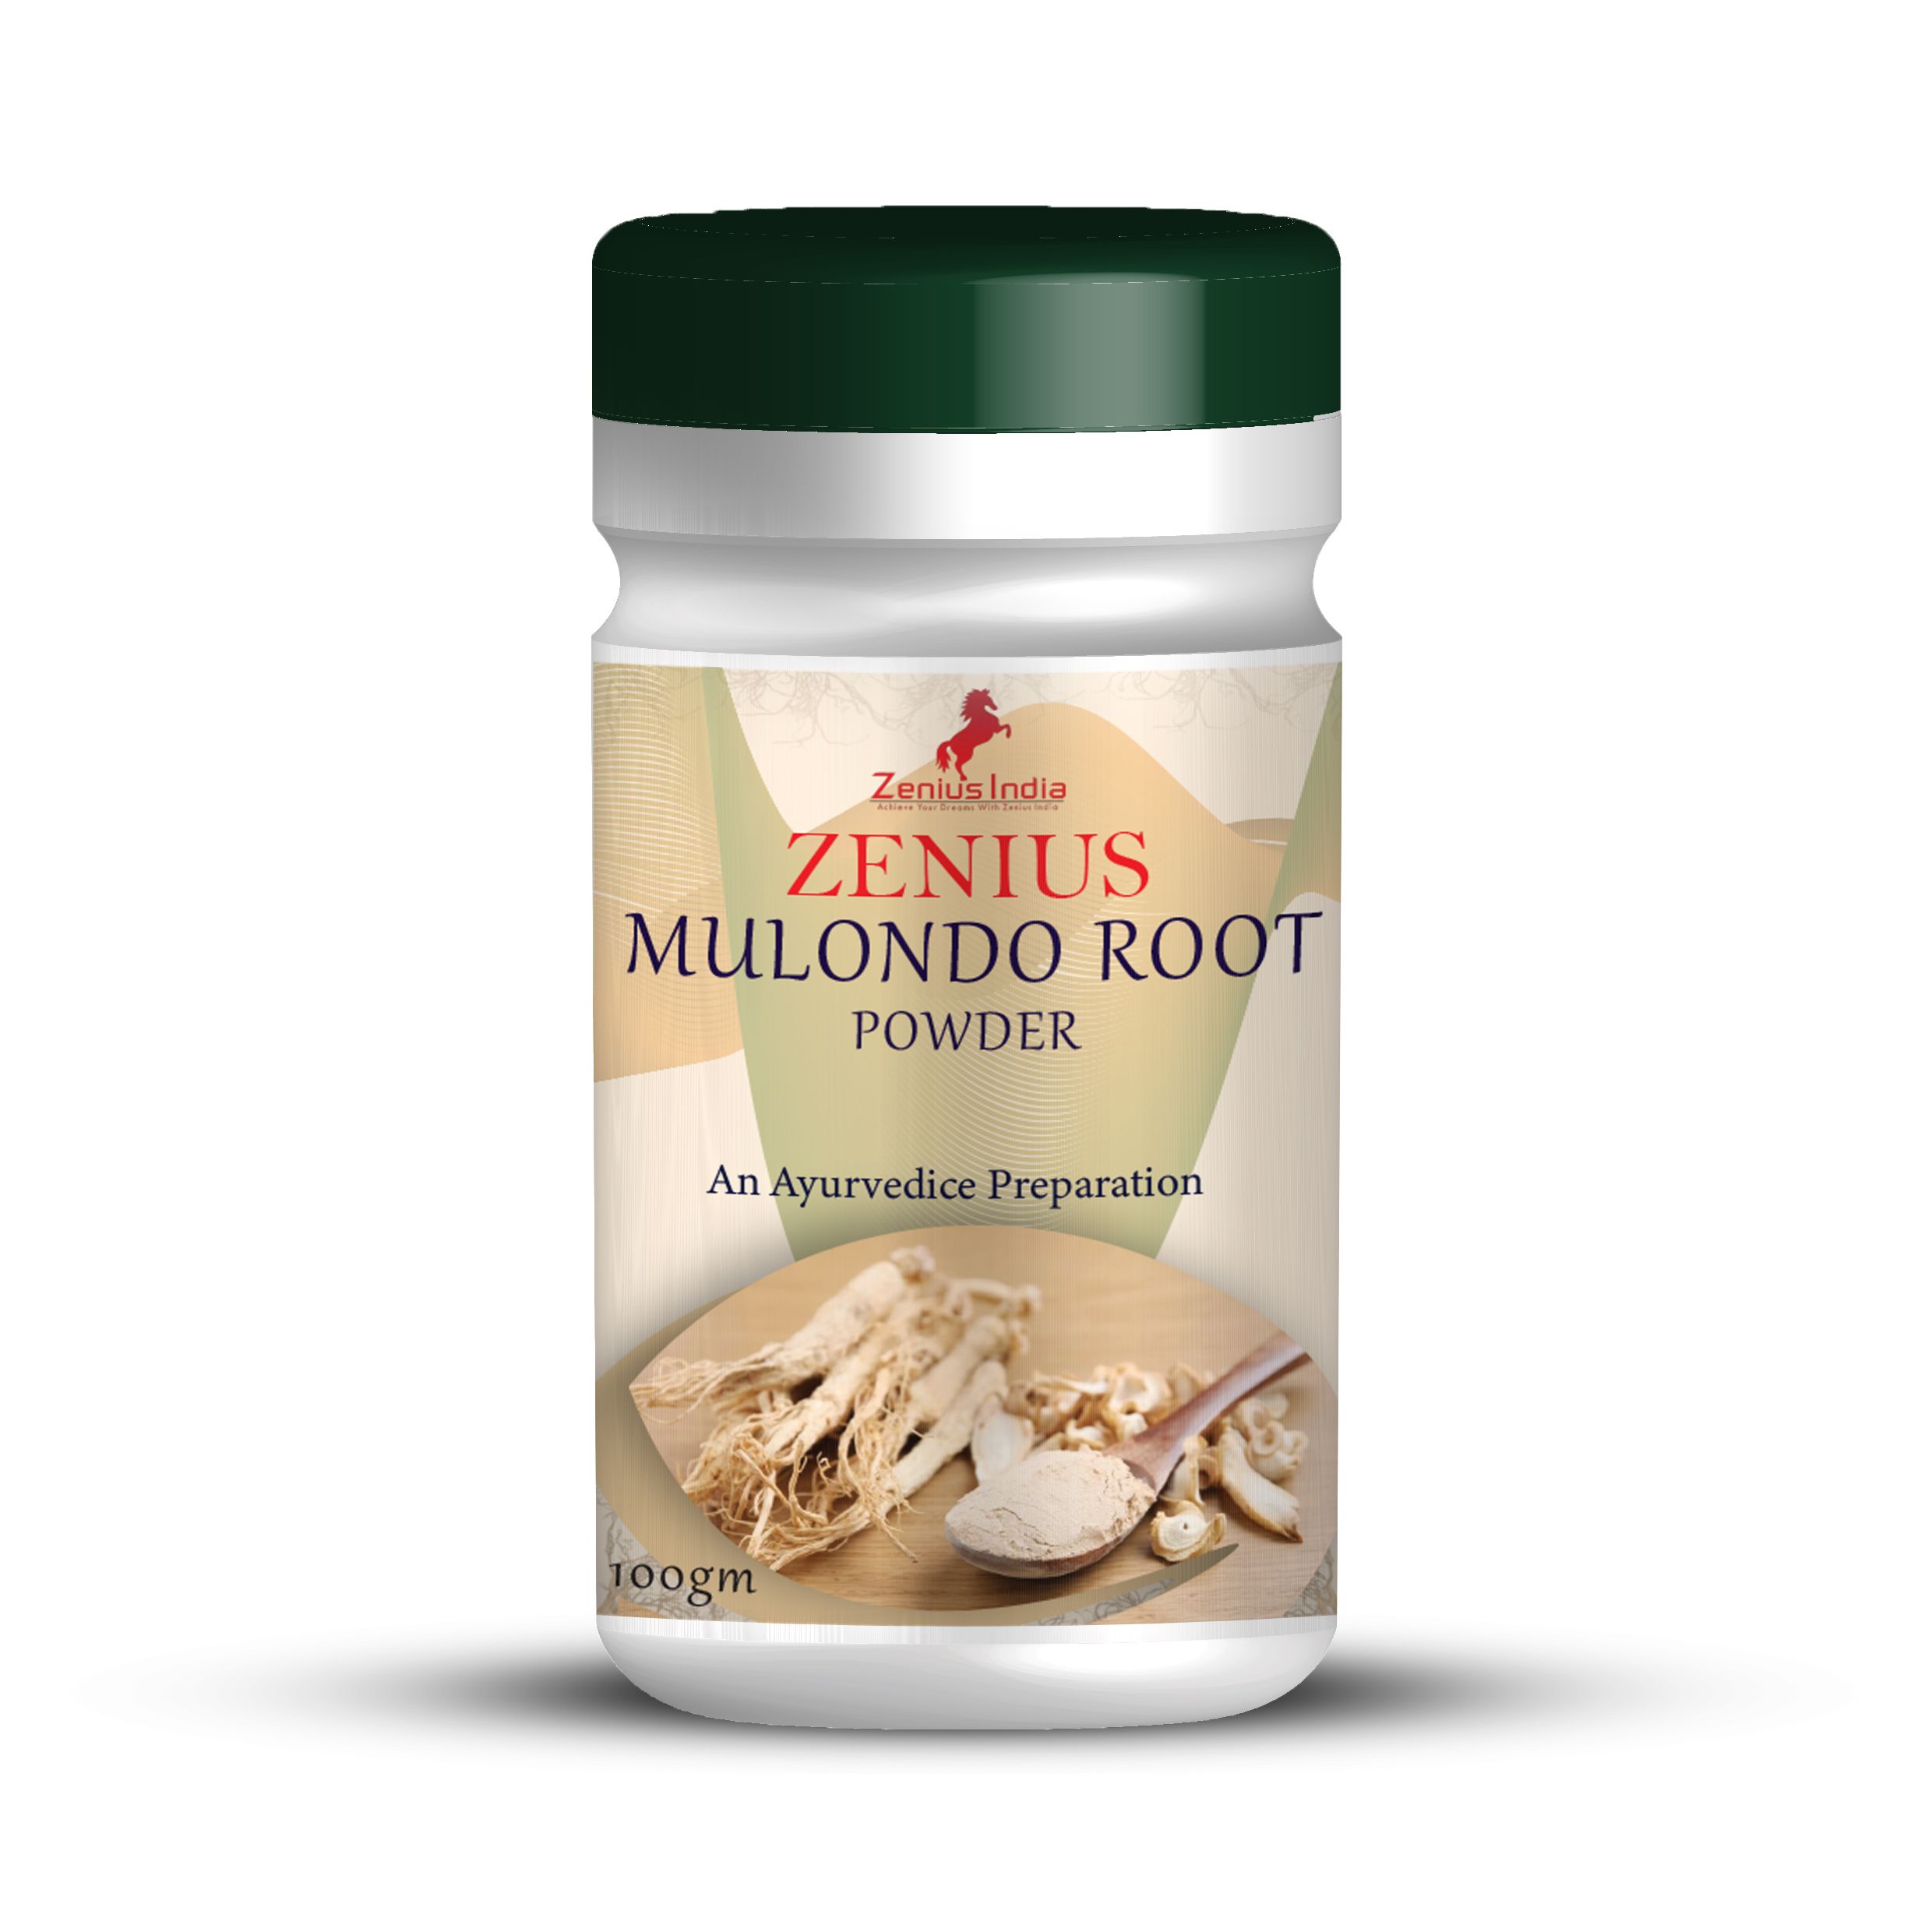 Buy Zenius Mulondo Root Powder at Best Price Online